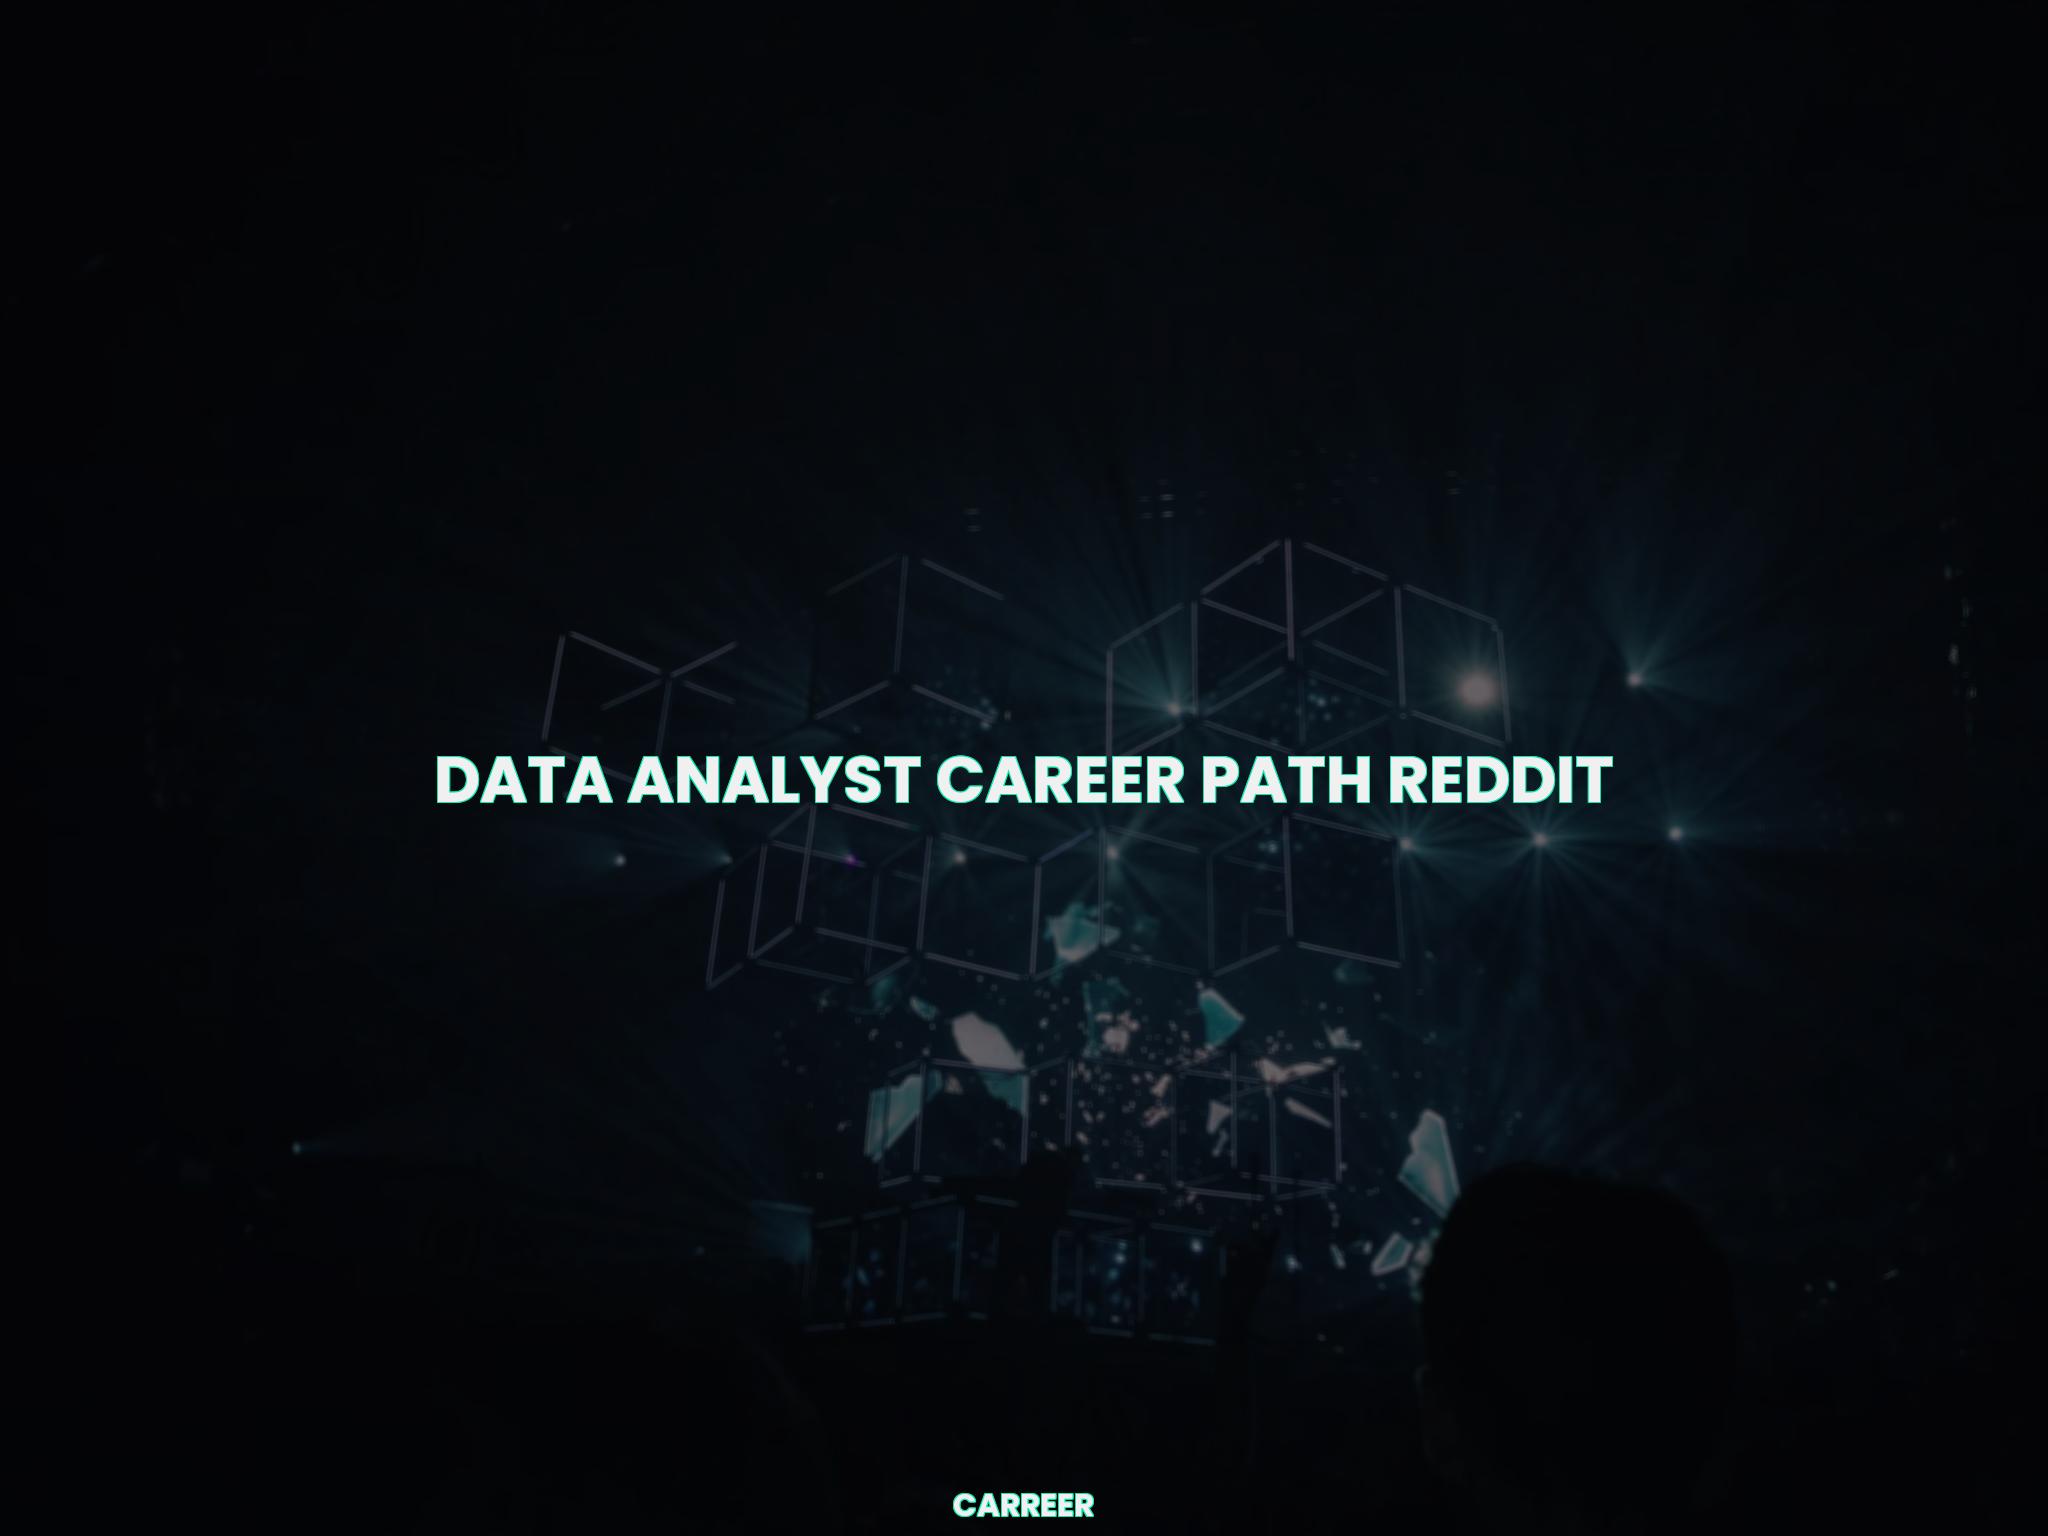 Data analyst career path reddit